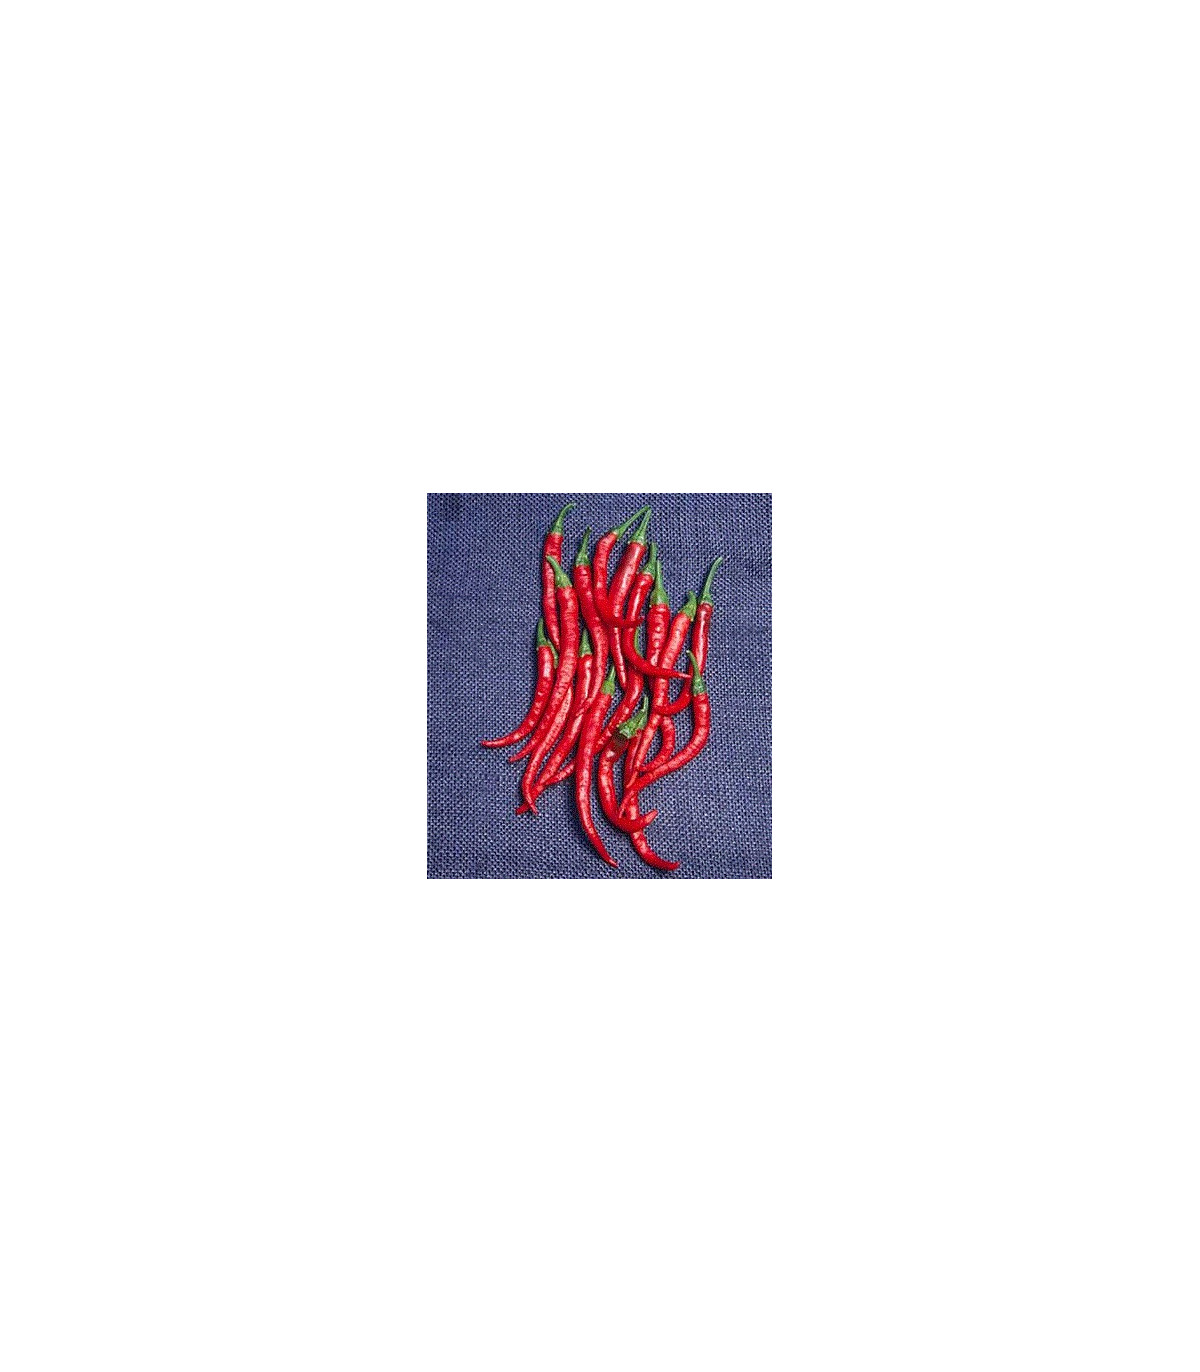 Kajenský pepř EXTRA dlouhý - Capsicum annuum - osivo chilli - 6 ks